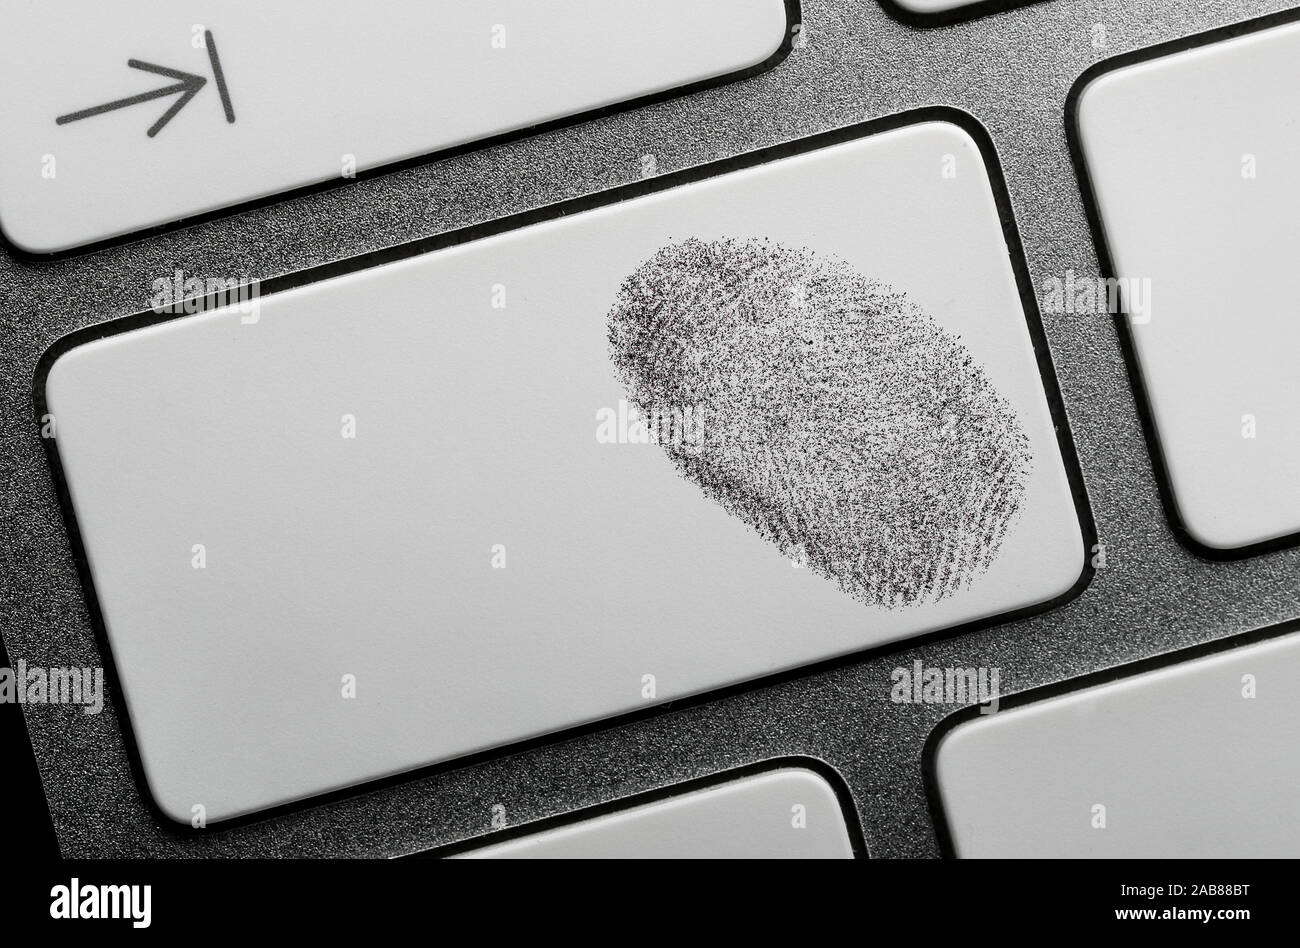 Concept internet crime image of a fingerprint left on a computer keyboard Stock Photo